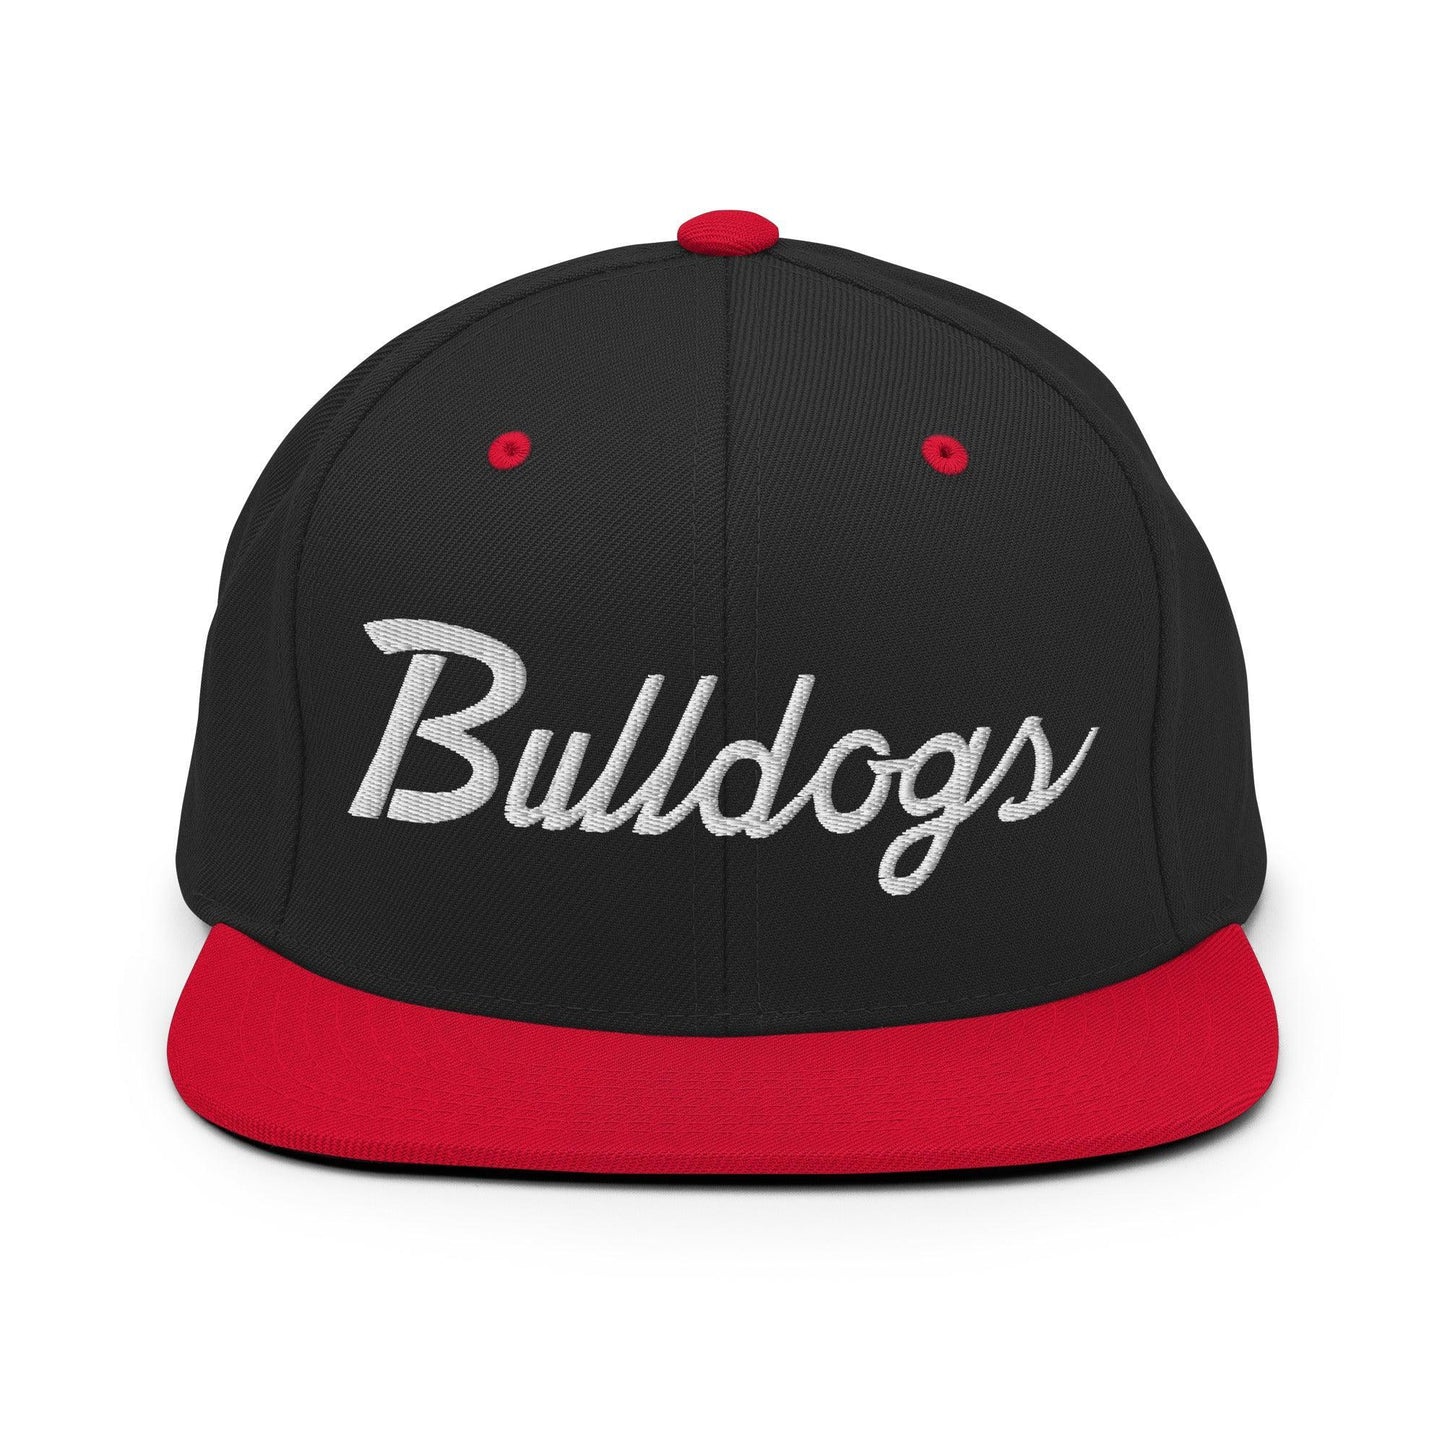 Bulldogs School Mascot Script Snapback Hat Black Red